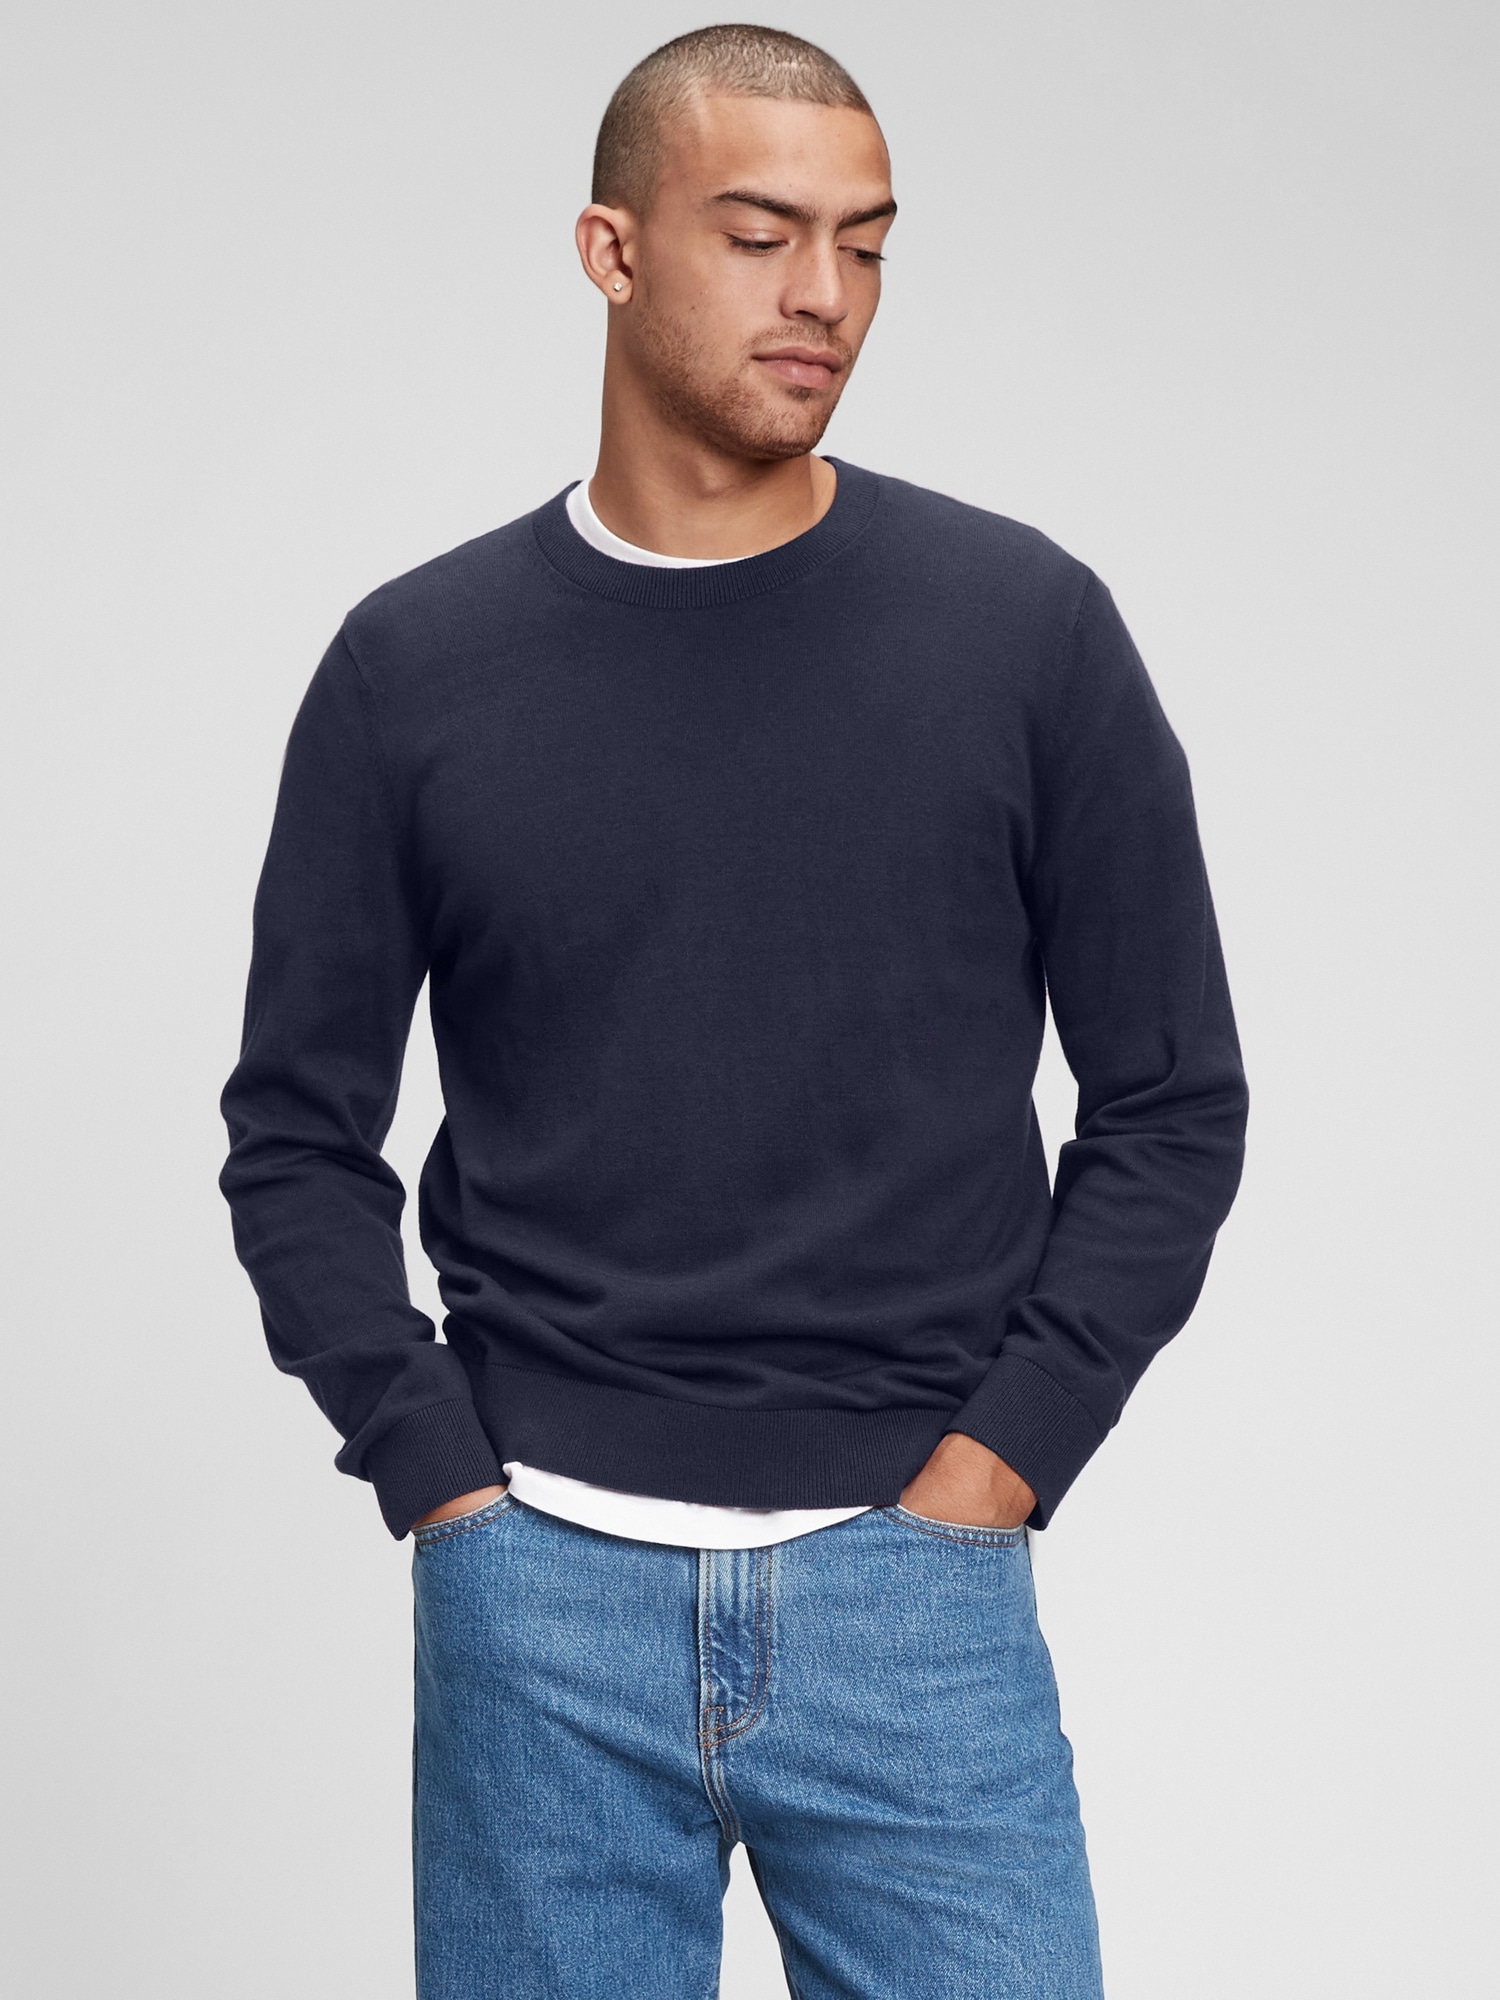 Mainstay Crewneck Sweater | Gap